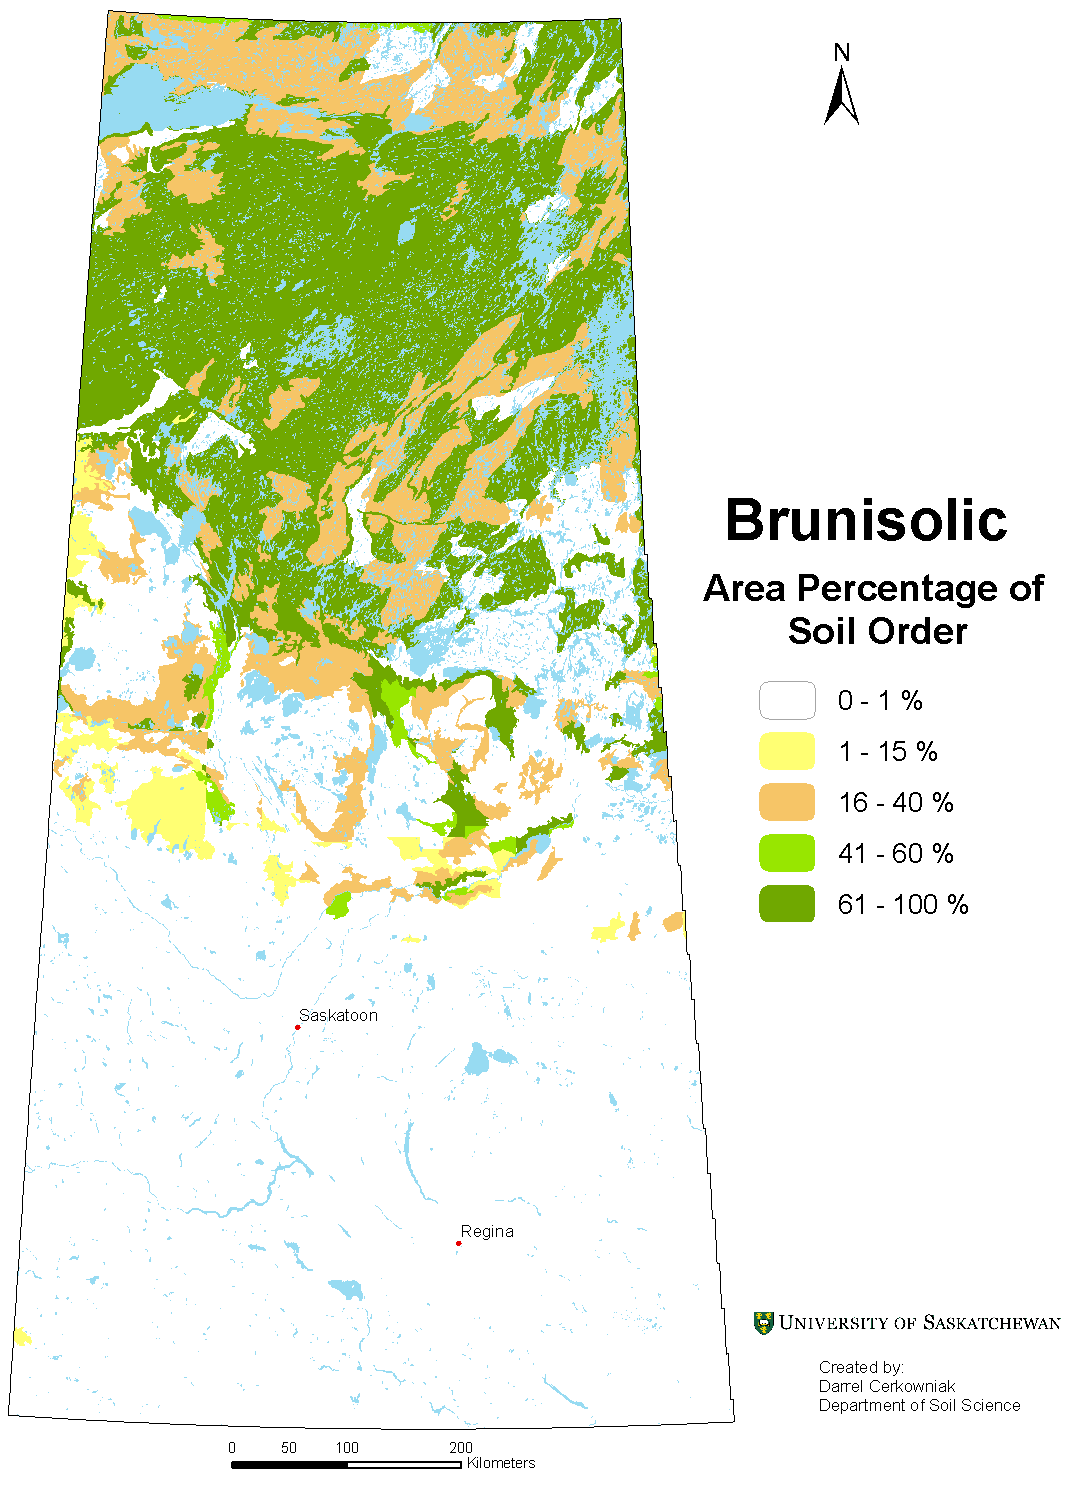 Distribution of Brunisolic soils in Saskatchewan